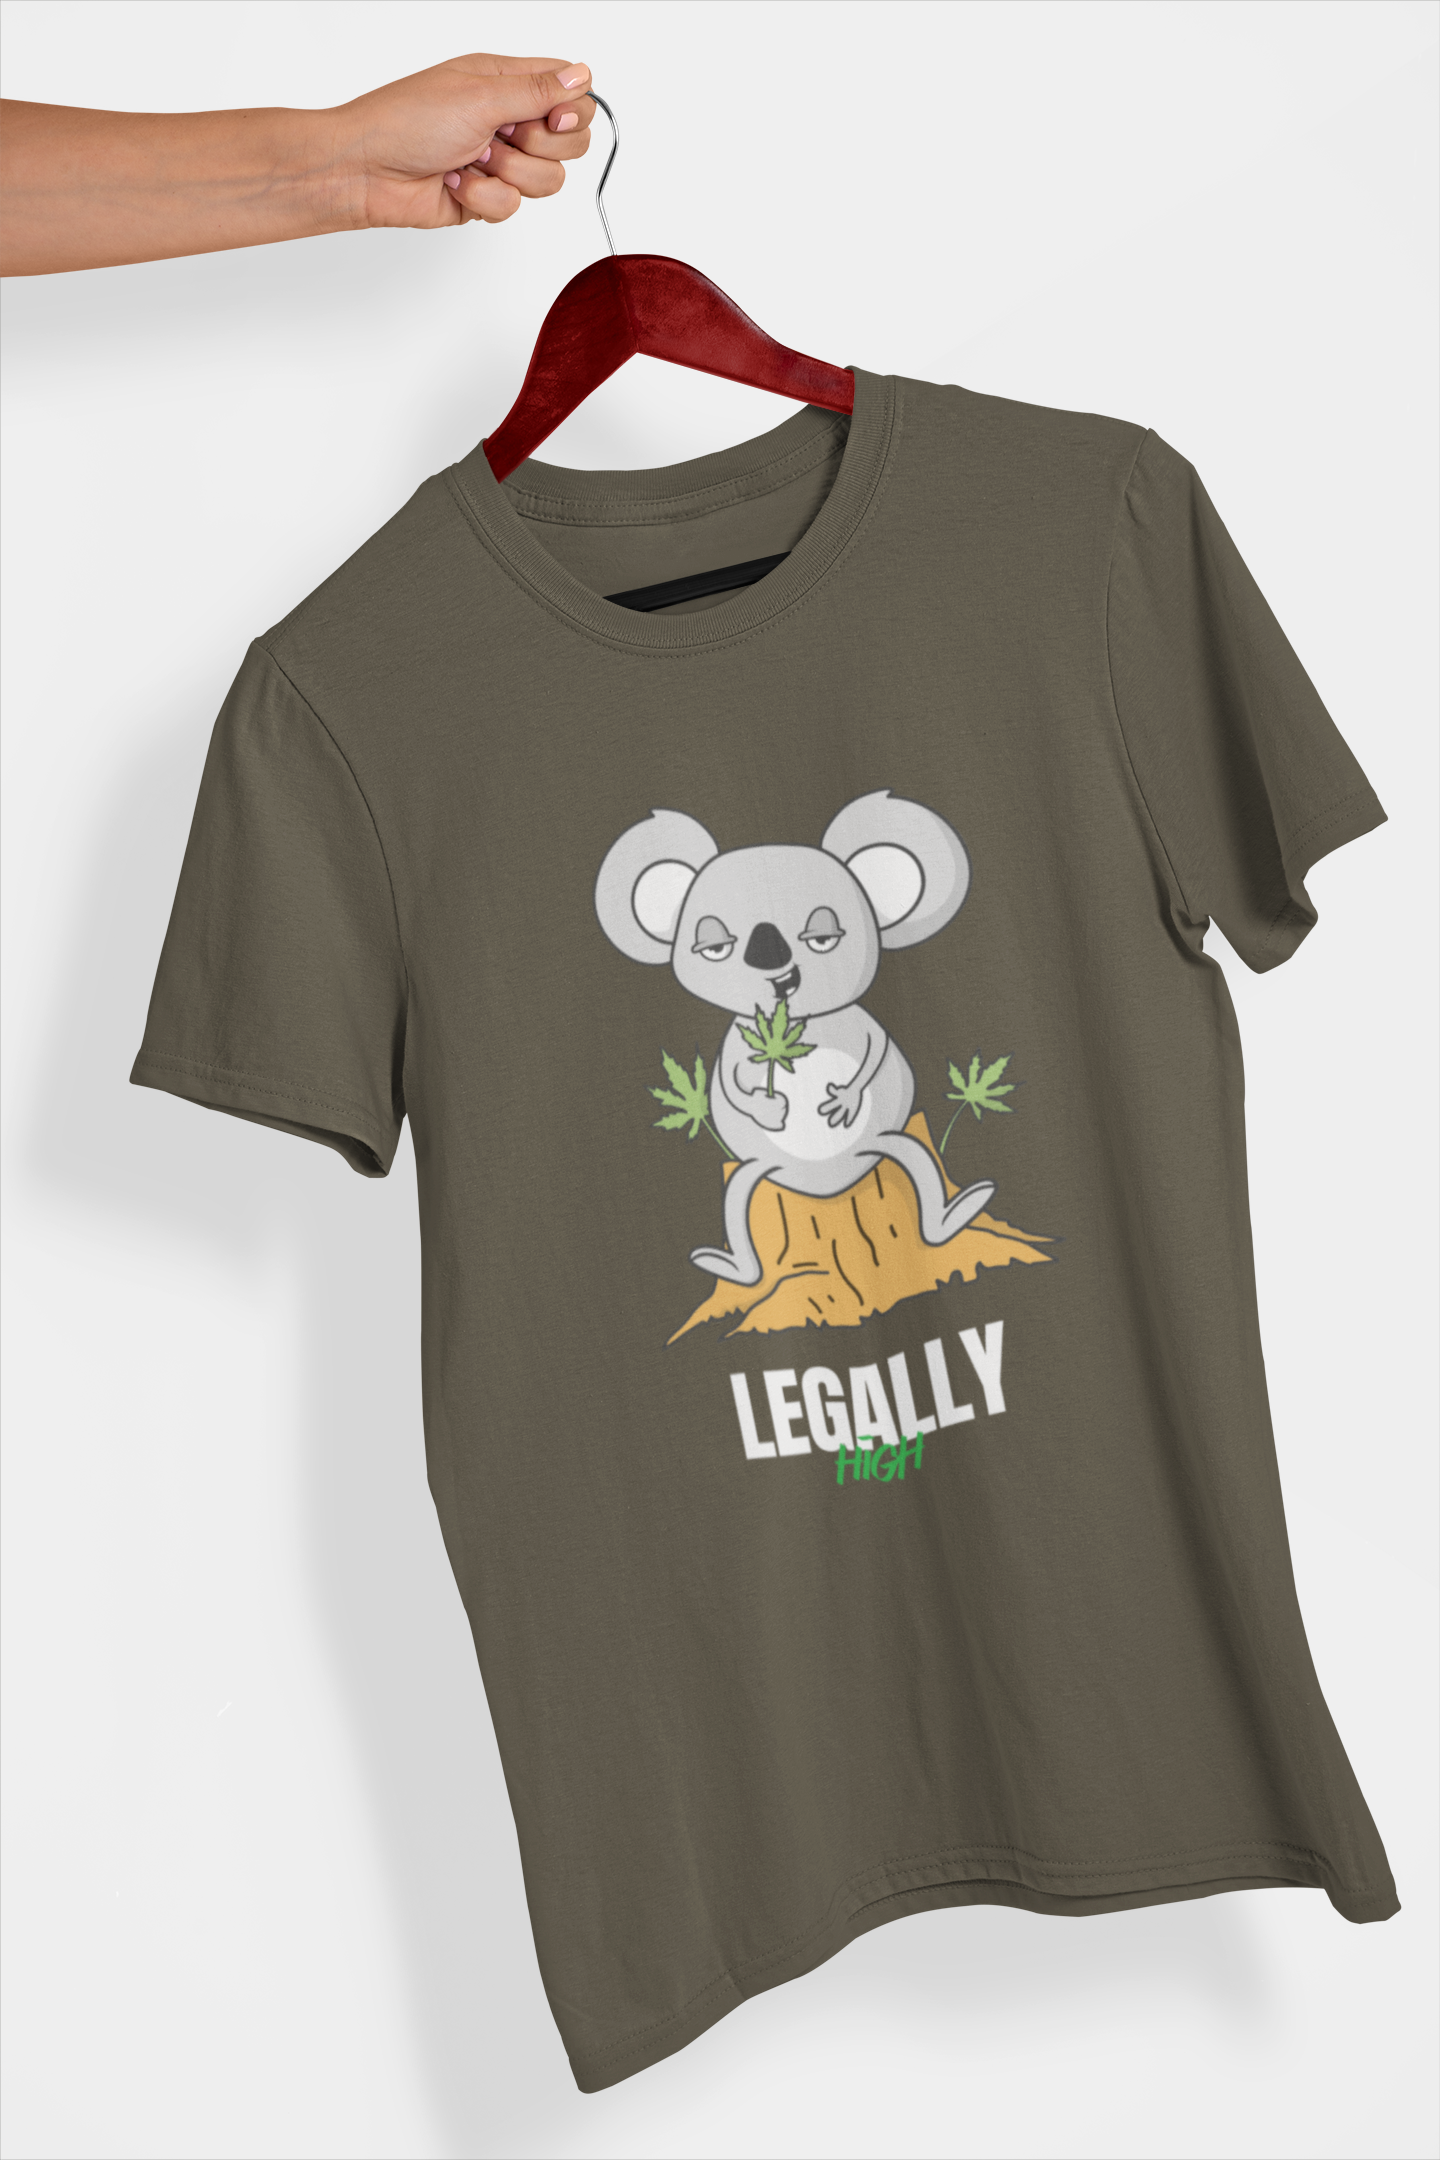 Legally High Men's Printed T-shirt Hipster Olive High & Humble Enterprises